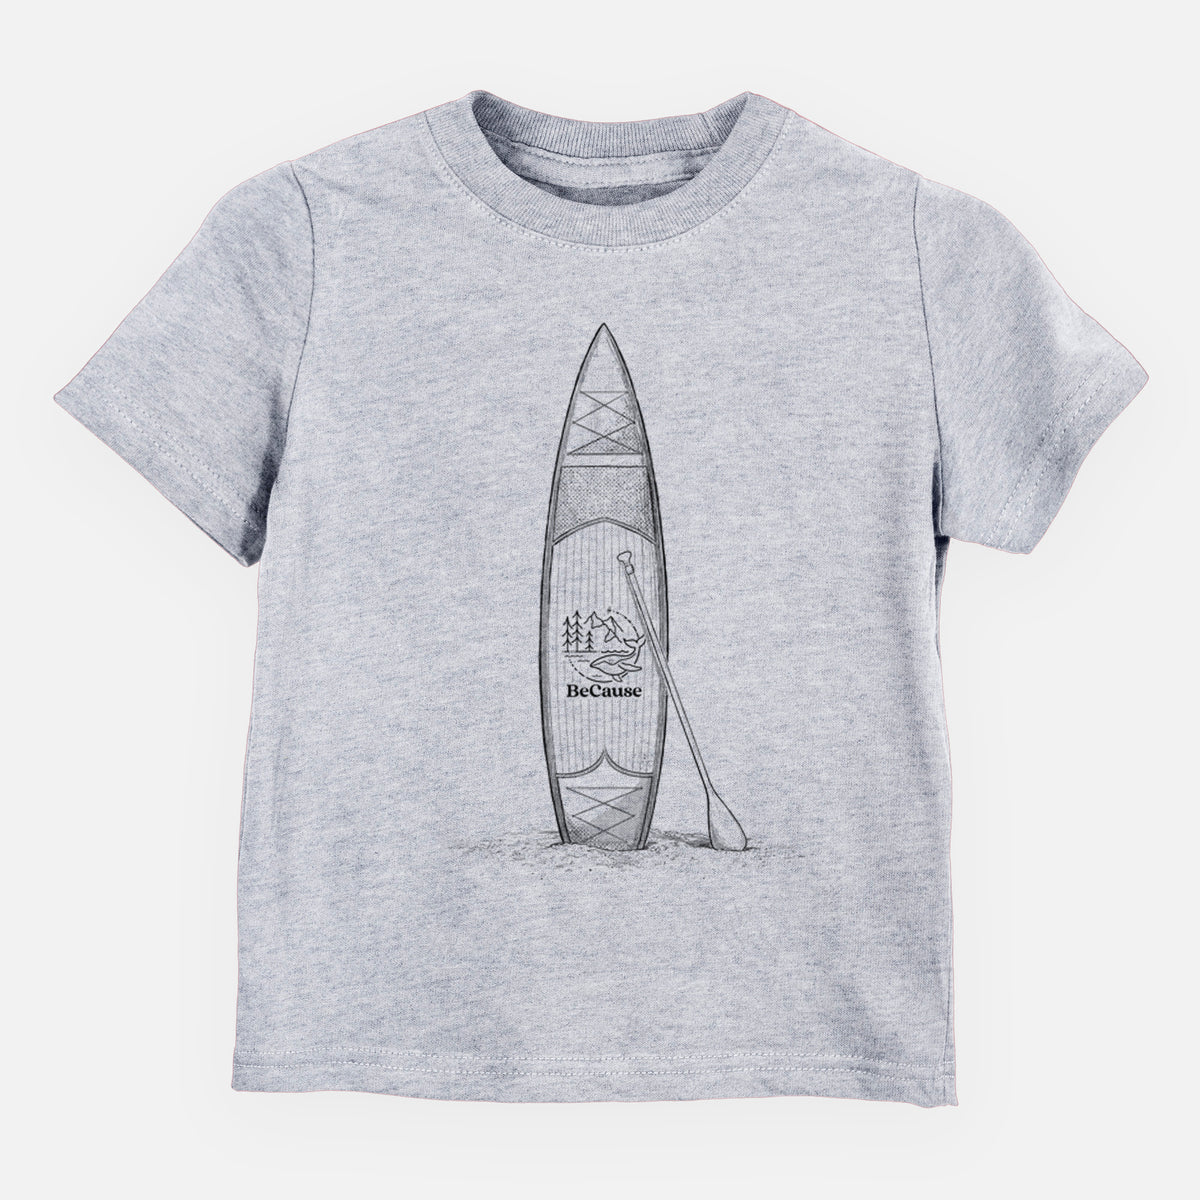 Stand-up Paddle Board - Kids Shirt